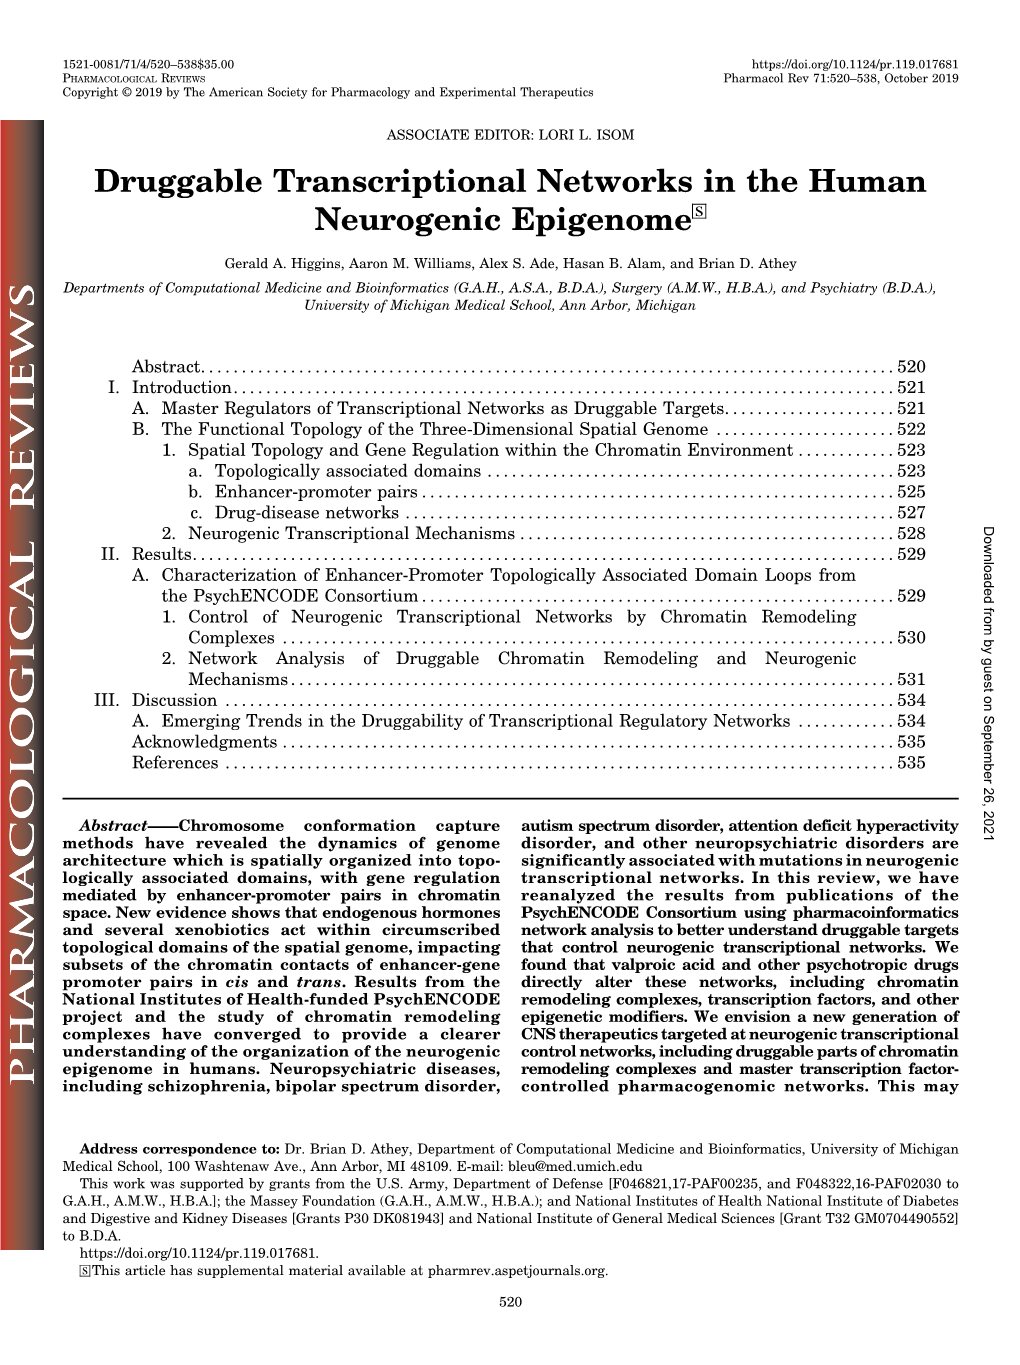 Druggable Transcriptional Networks in the Human Neurogenic Epigenomes